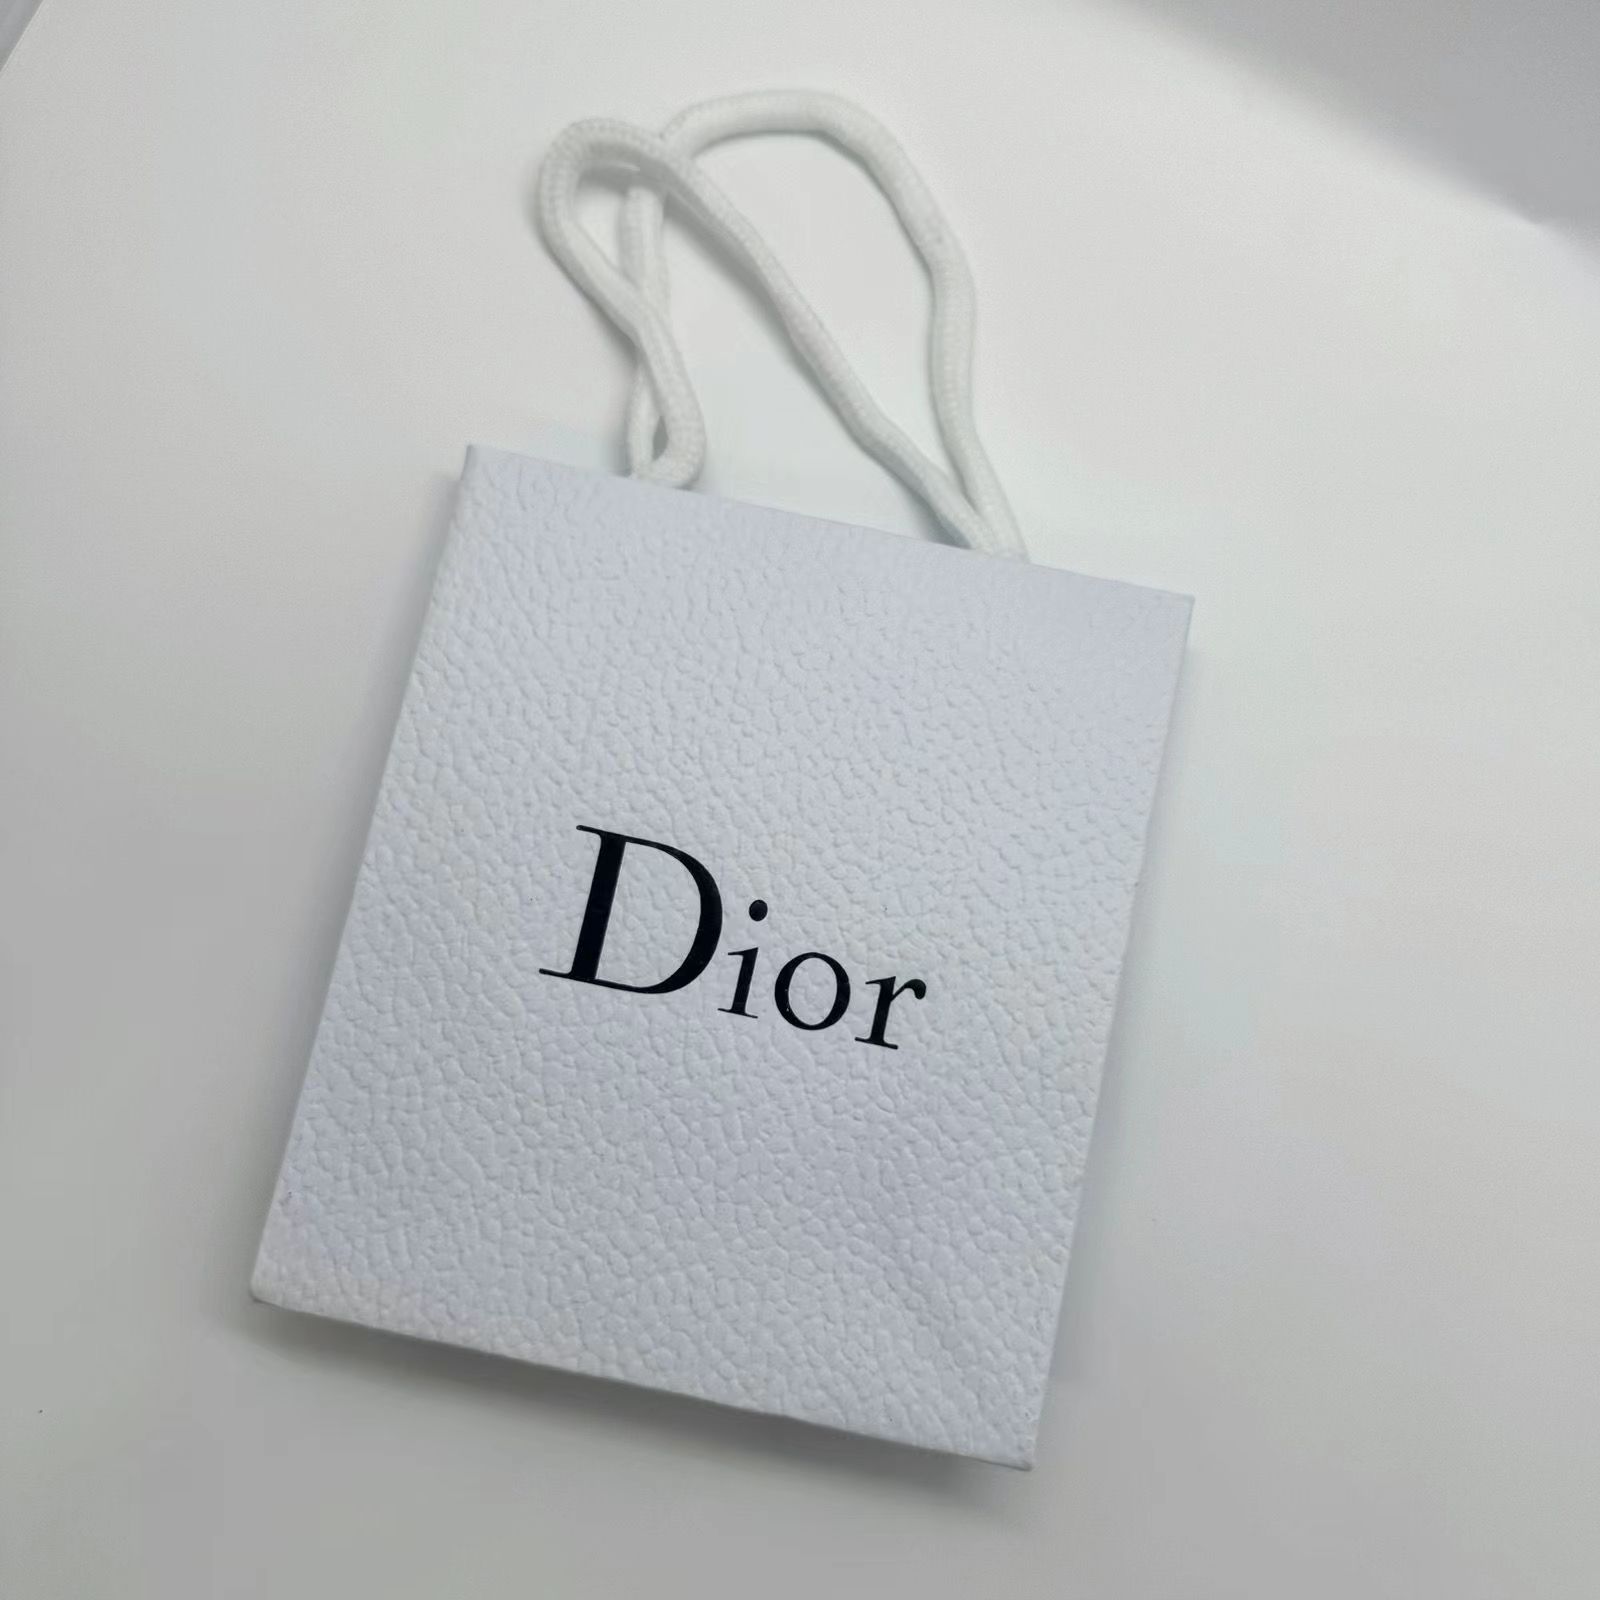 Dior jewelry box set